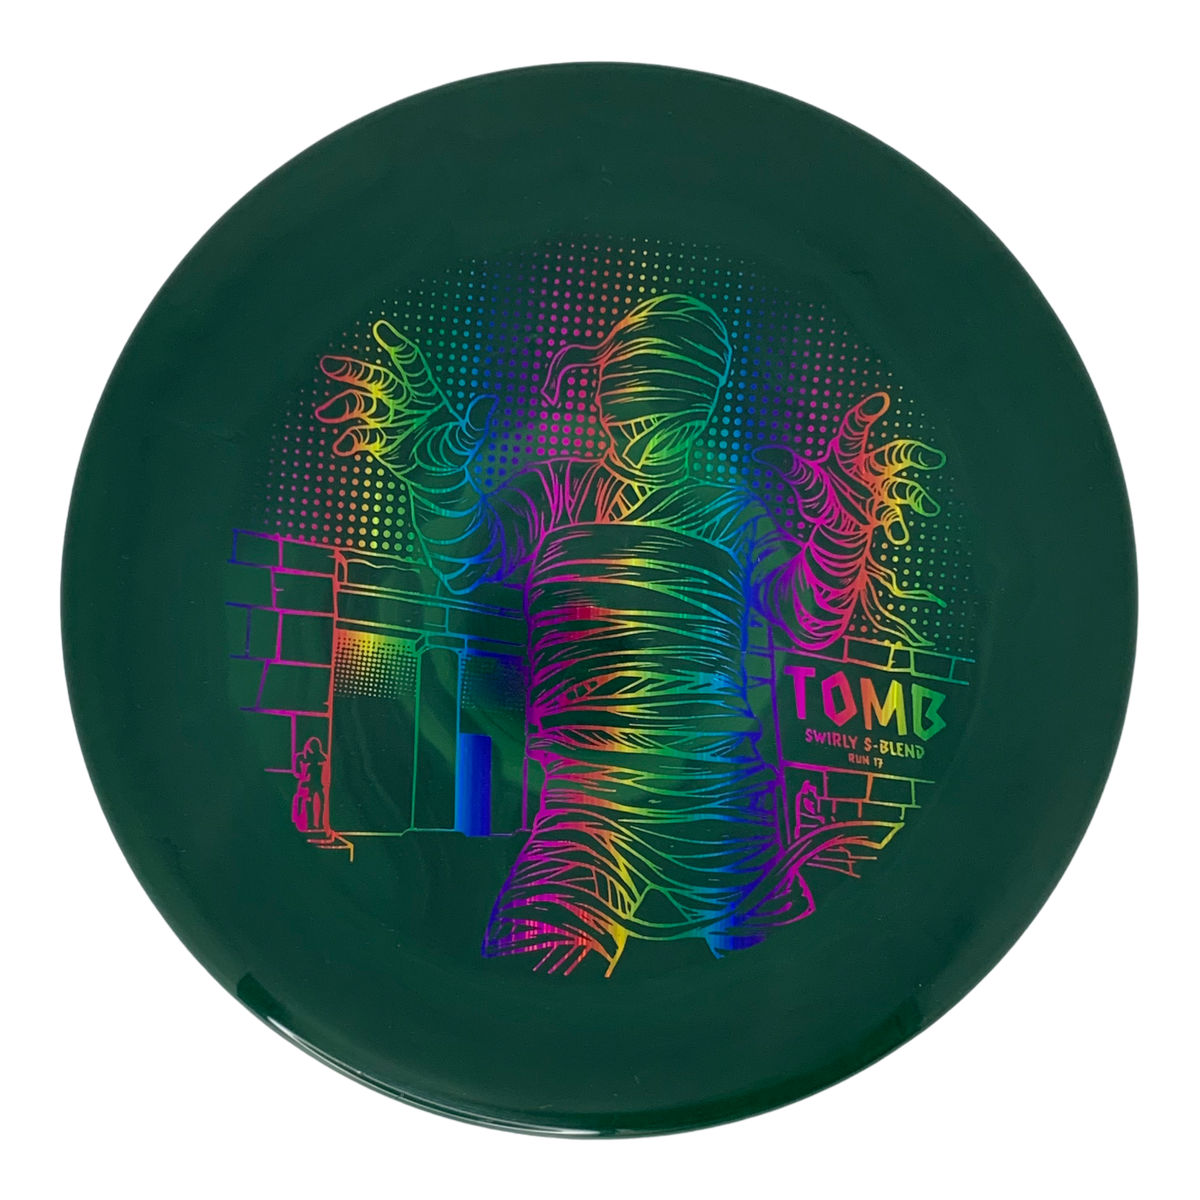 Infinite Discs Swirly S-Blend Tomb